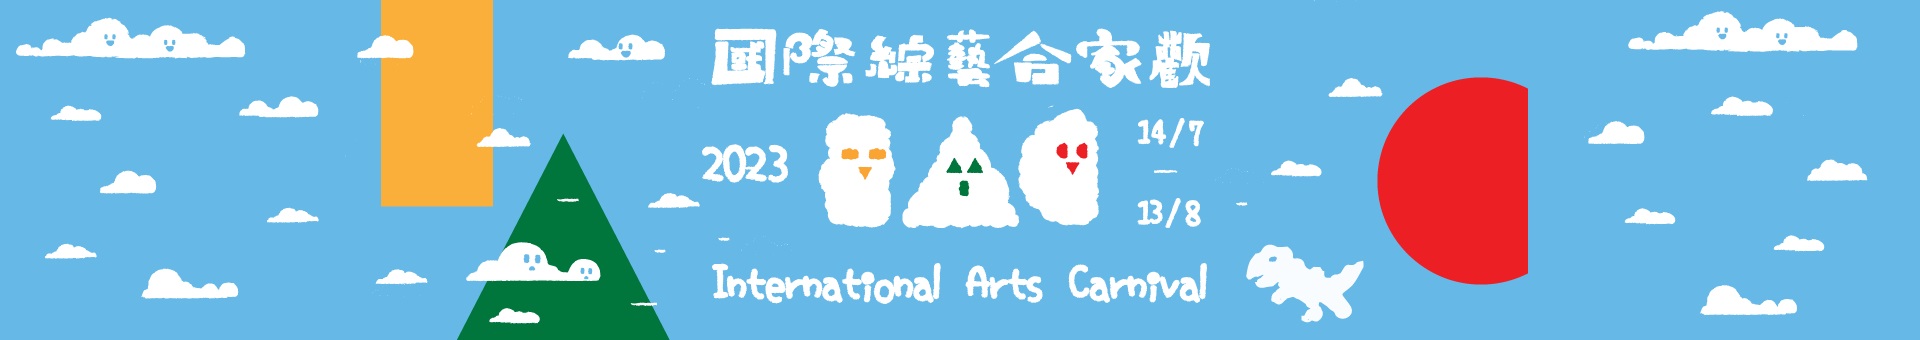 International Arts Carnival 2023